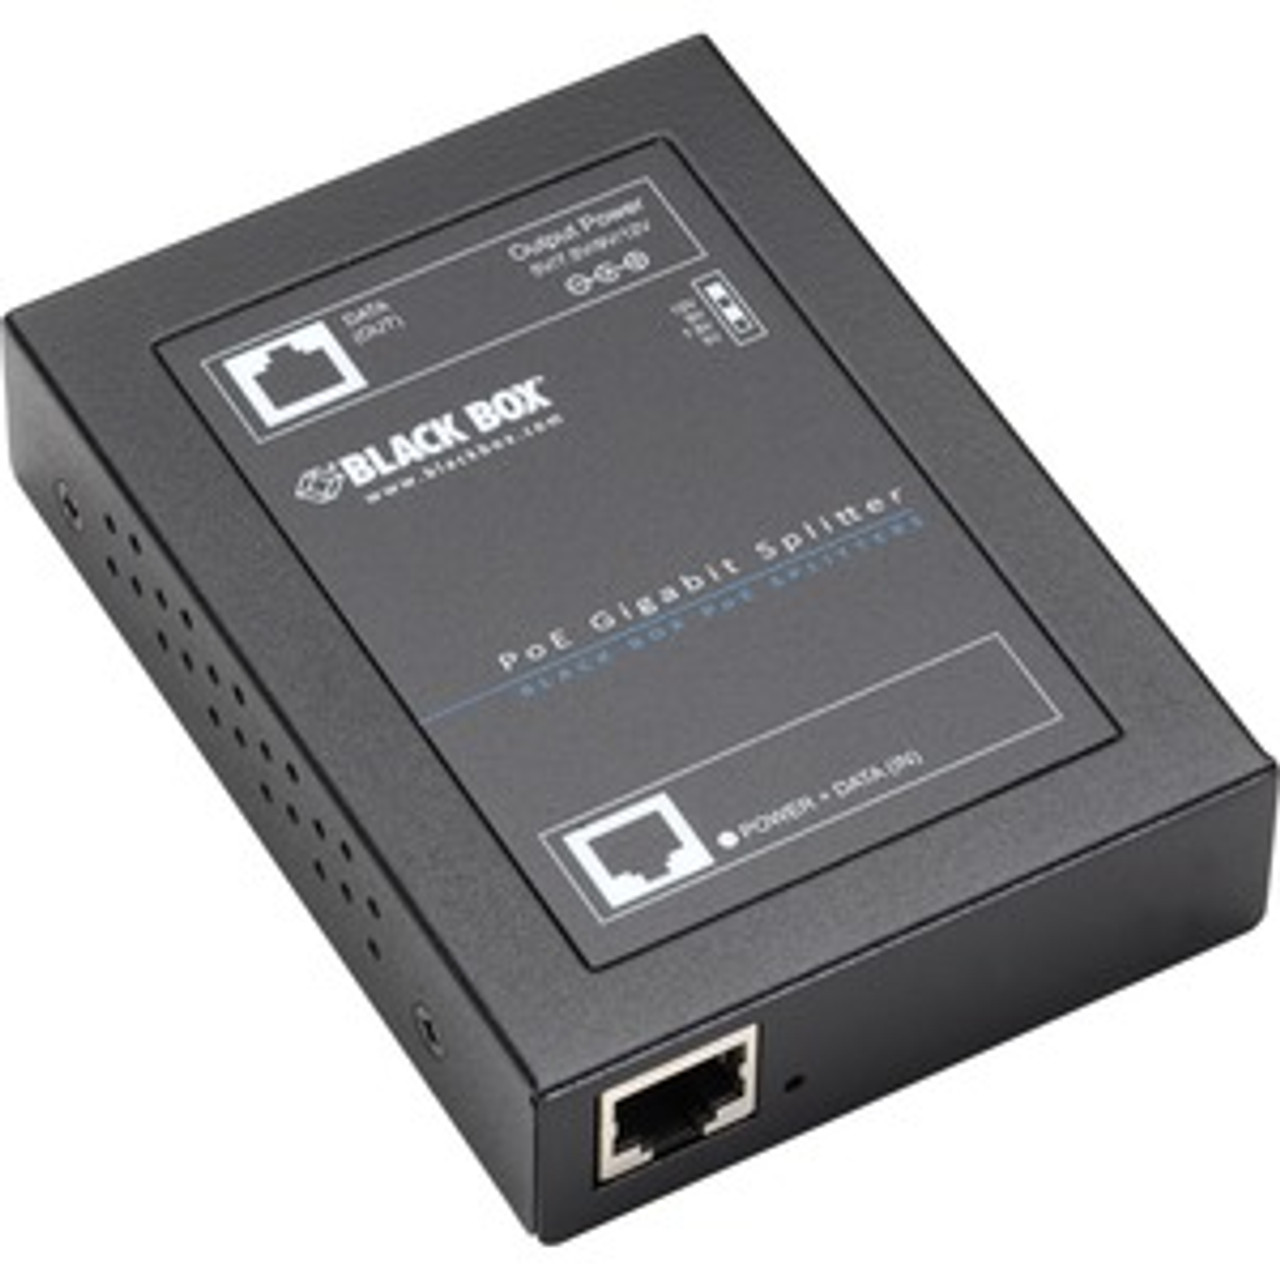 LPS2001 Black Box Gigabit Poe+ Splitter Bring Poe Power To Non-poe Devices